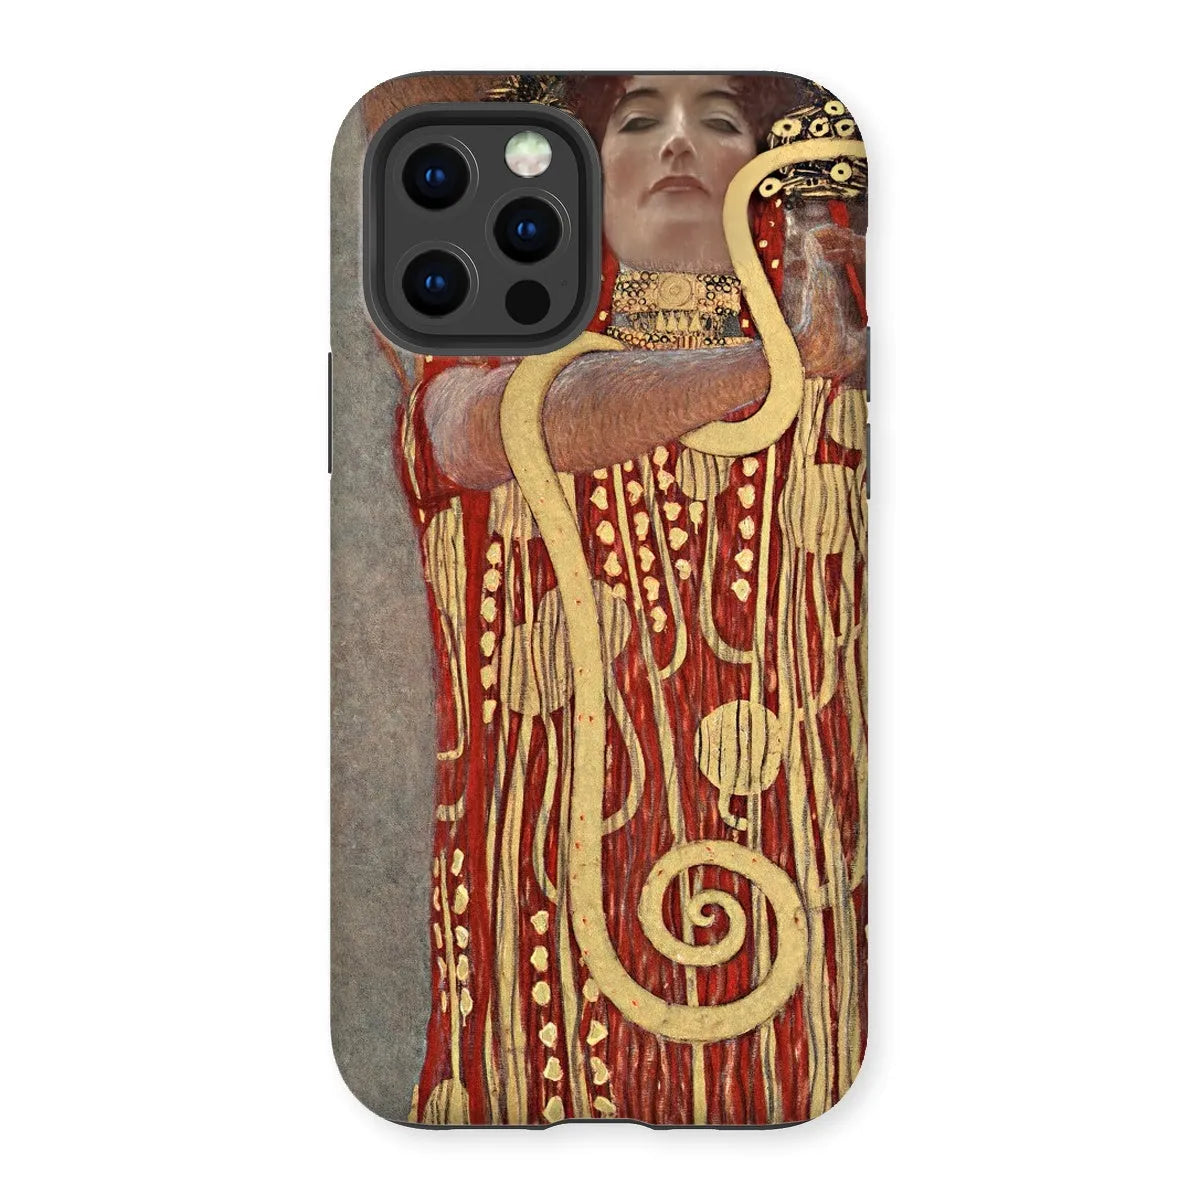 Hygieia - Vienna Succession Phone Case - Gustav Klimt - Iphone 12 Pro / Matte - Mobile Phone Cases - Aesthetic Art